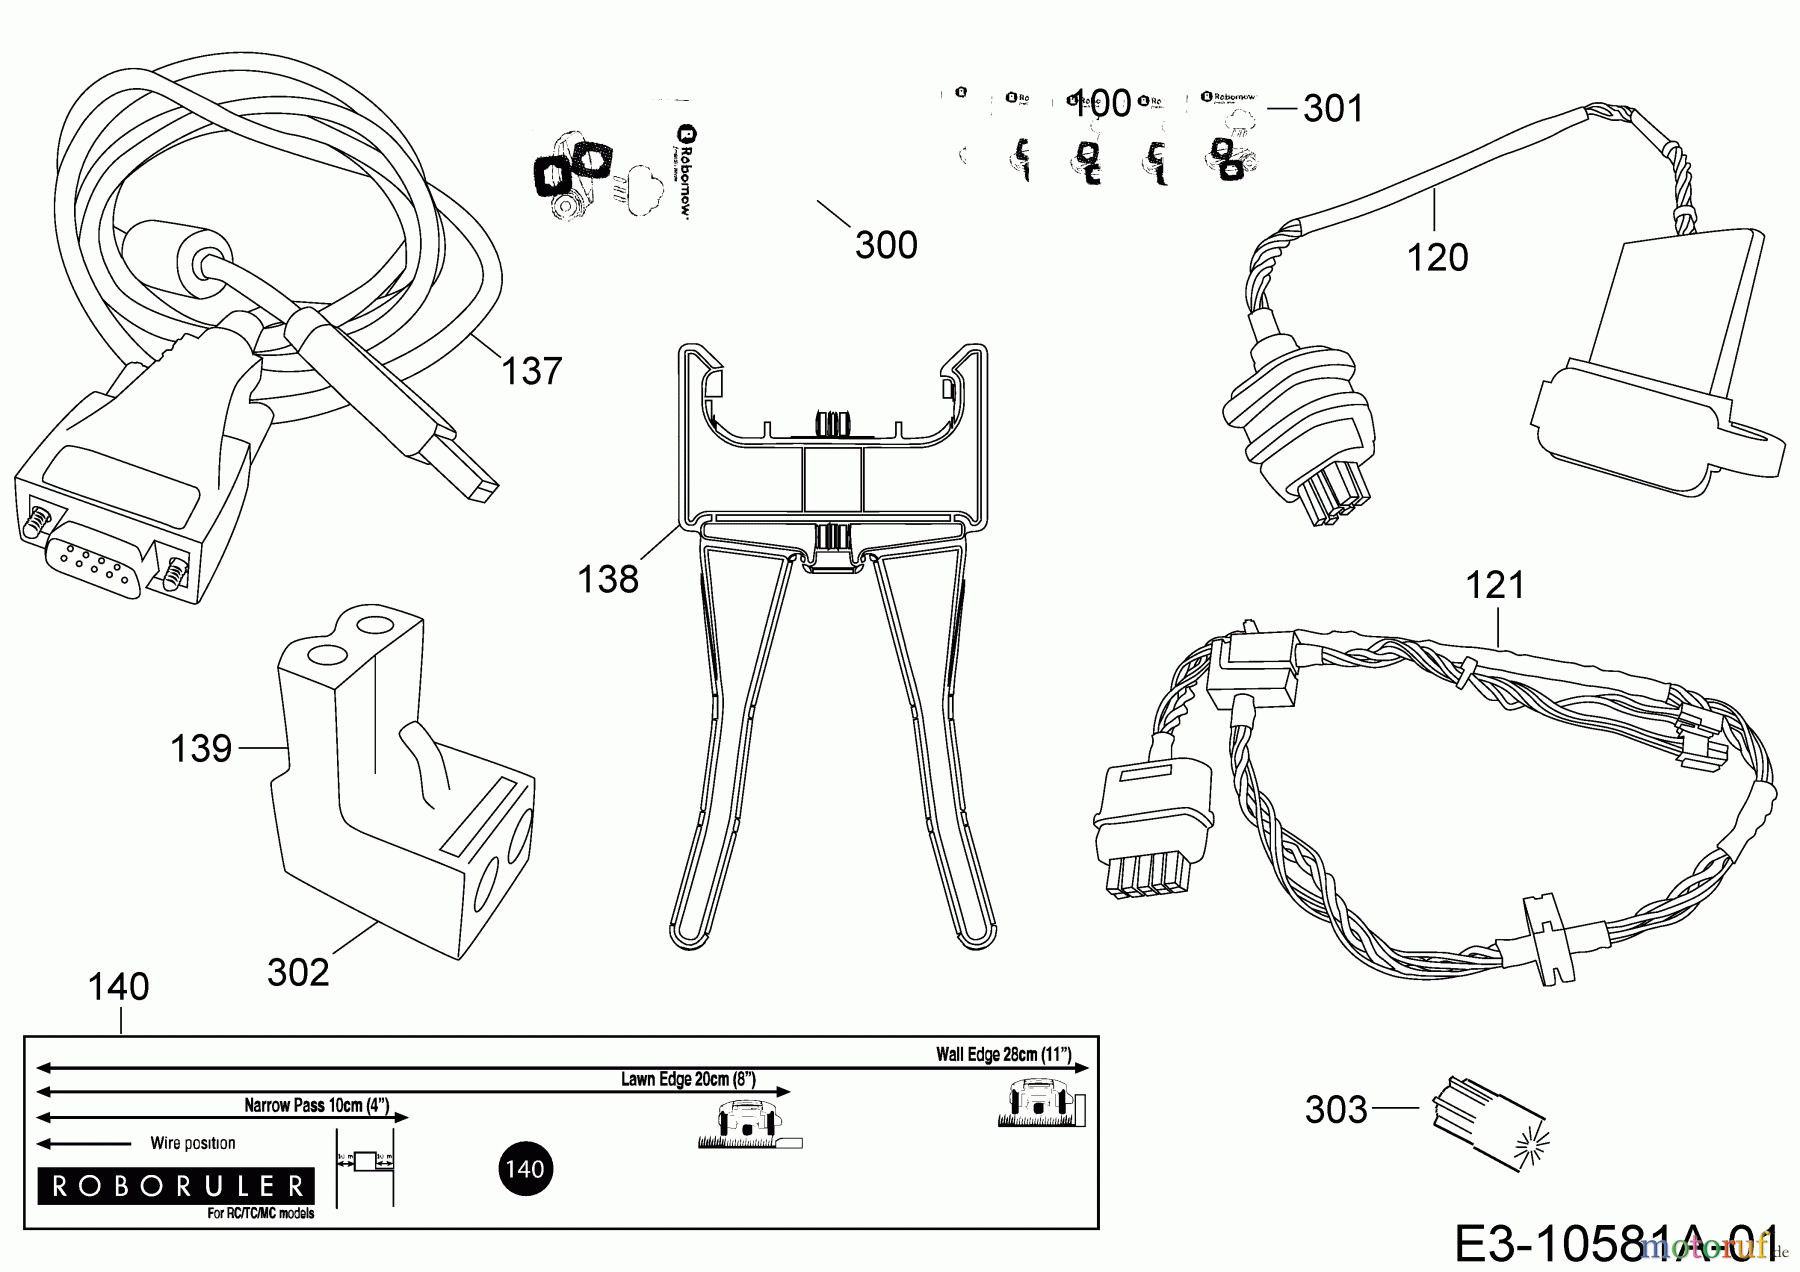  Robomow Mähroboter RC304 PRD7004B  (2015) Kabel, Kabelanschluß, Regensensor, Werkzeug